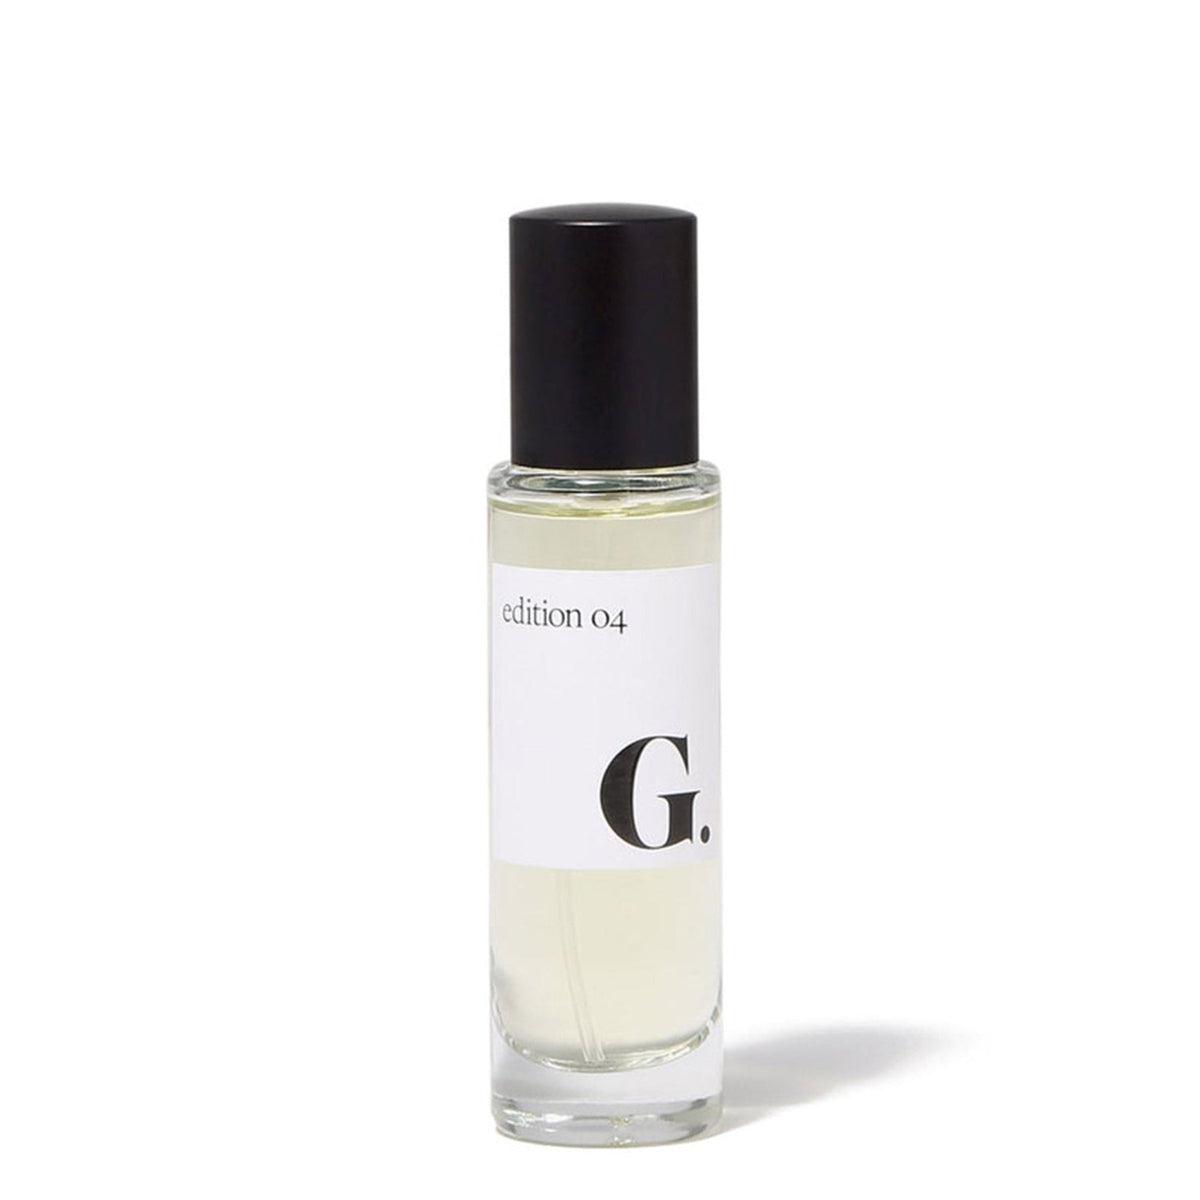 Goop Eau de Parfum: Edition 04 - Orchard | The Detox Market - Canada